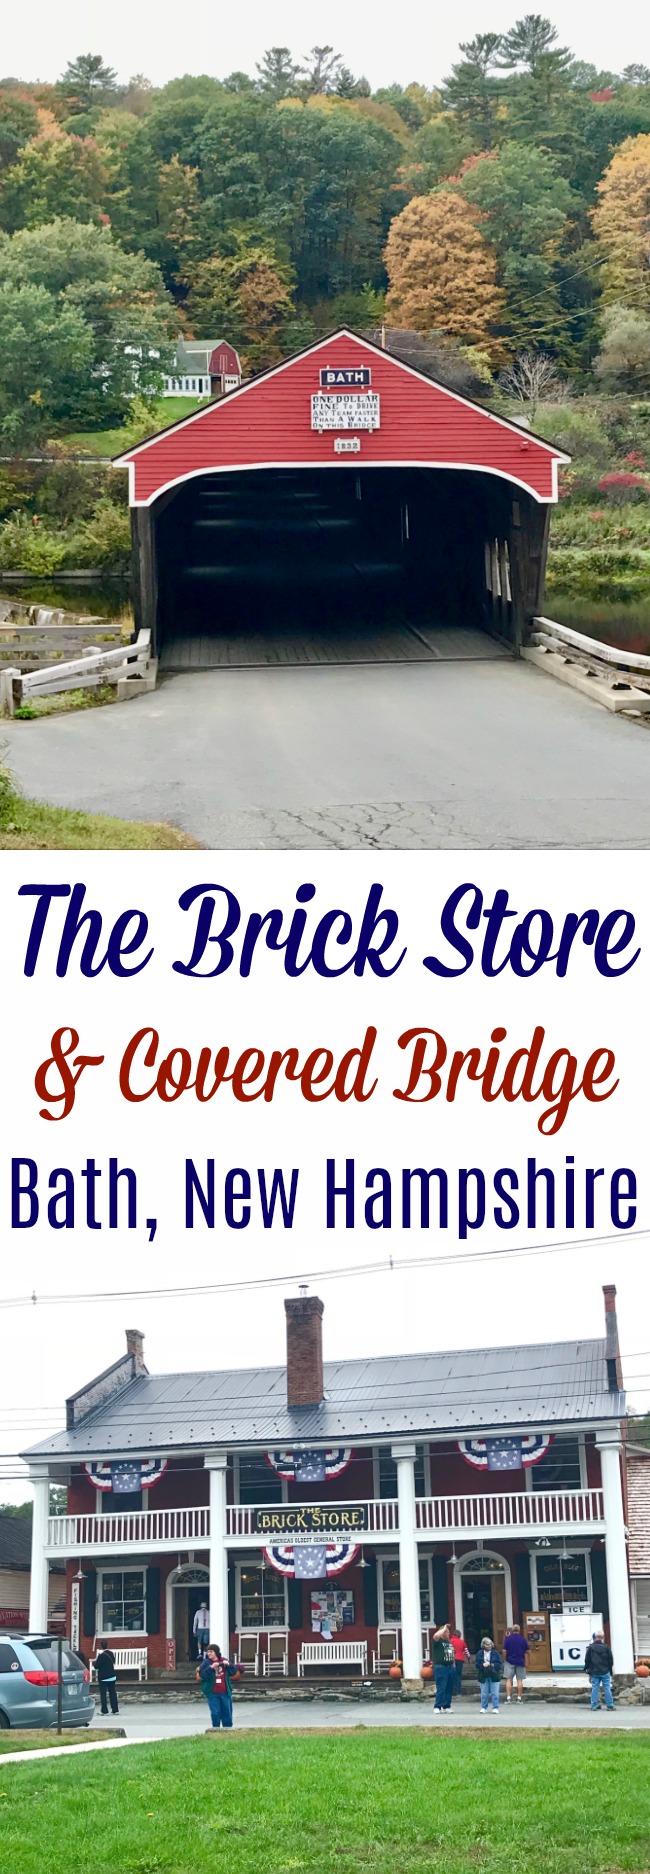 The Brick Store and a Covered Bridge in Bath, New Hampshire